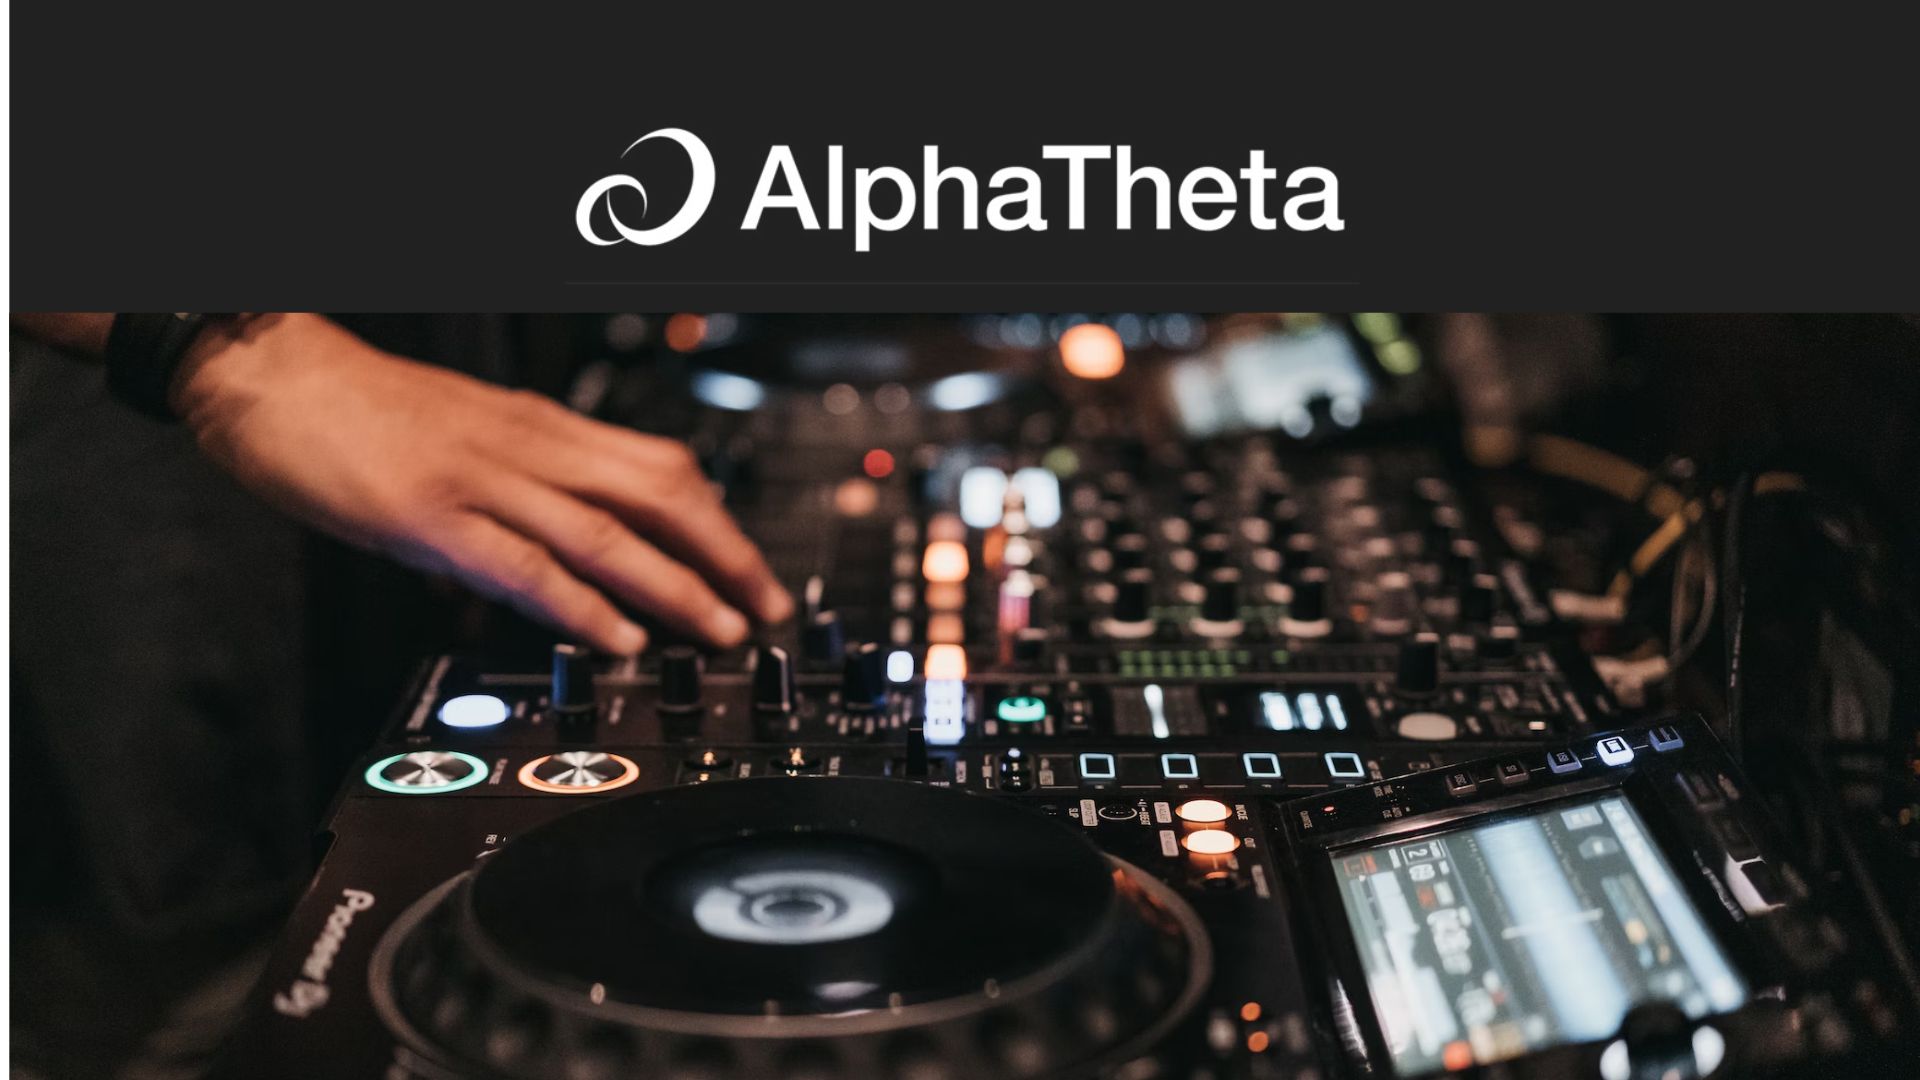 Pioneer DJ parent company unveils AlphaTheta brand